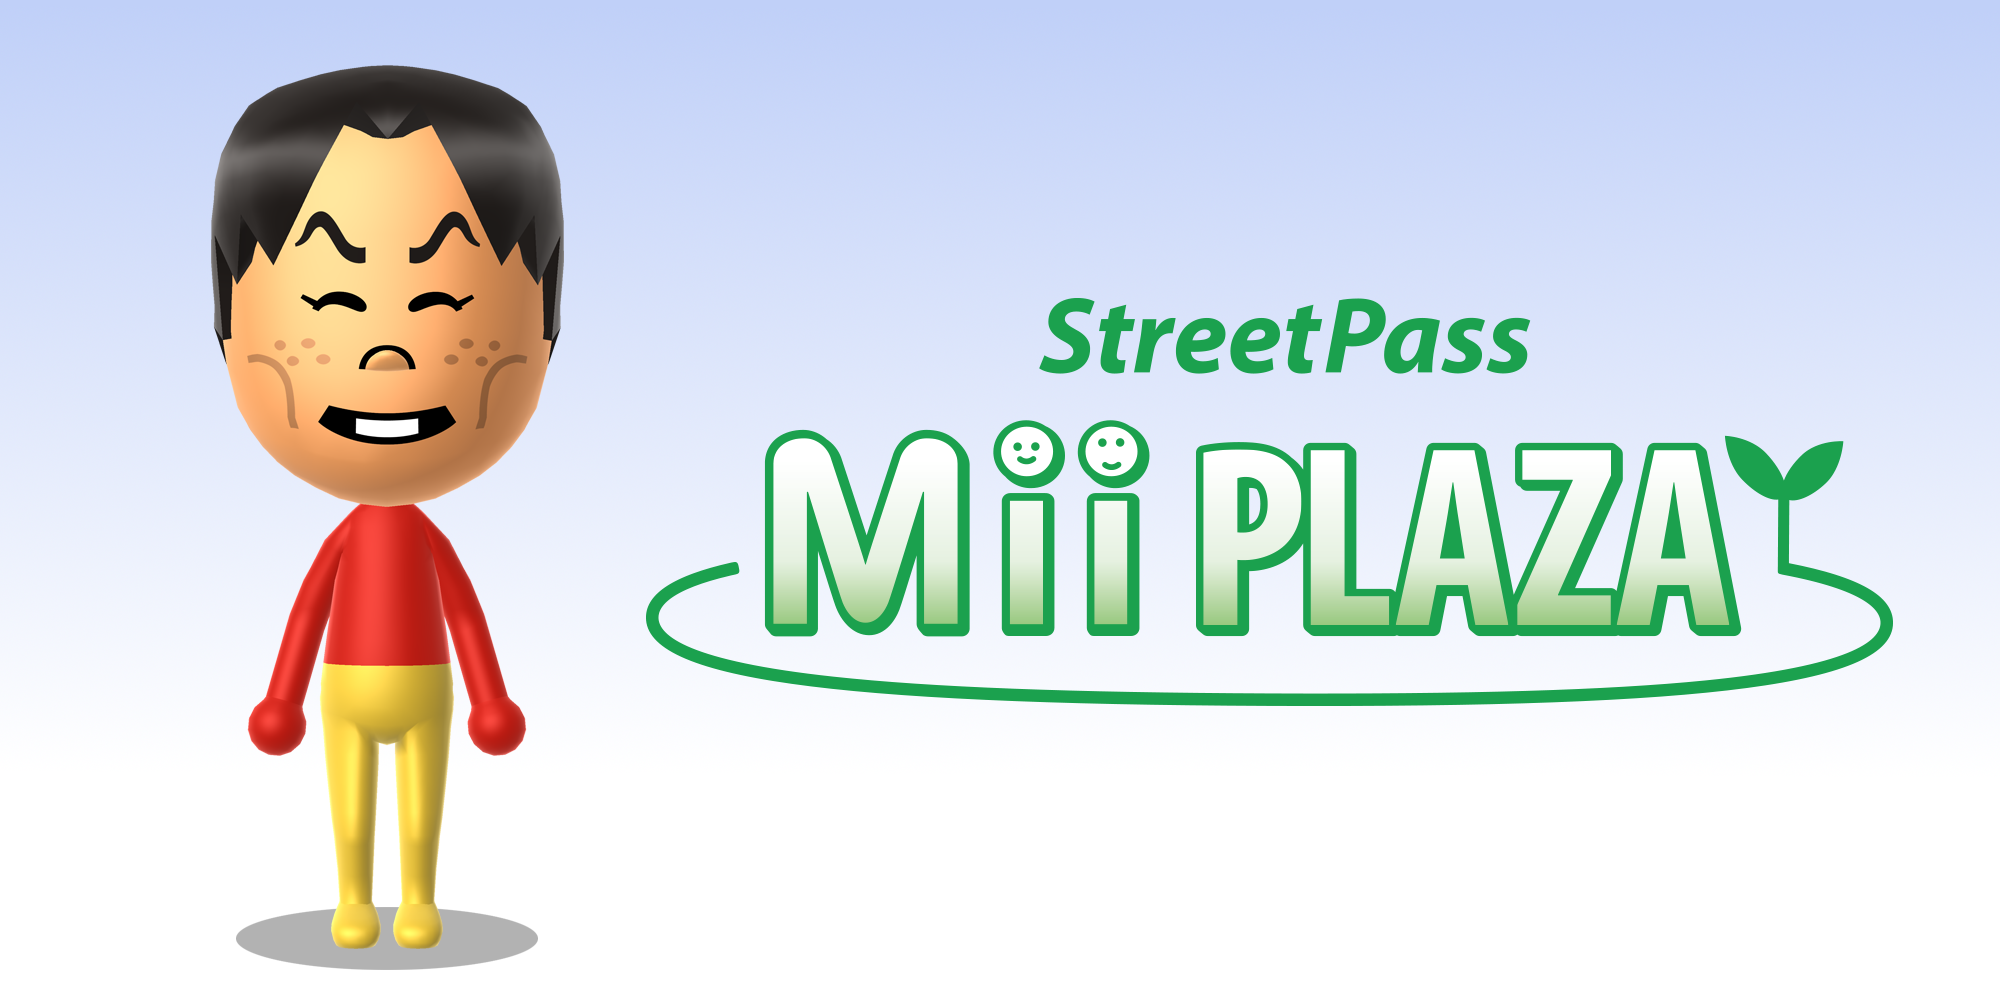 What was StreetPass Mii Plaza like?